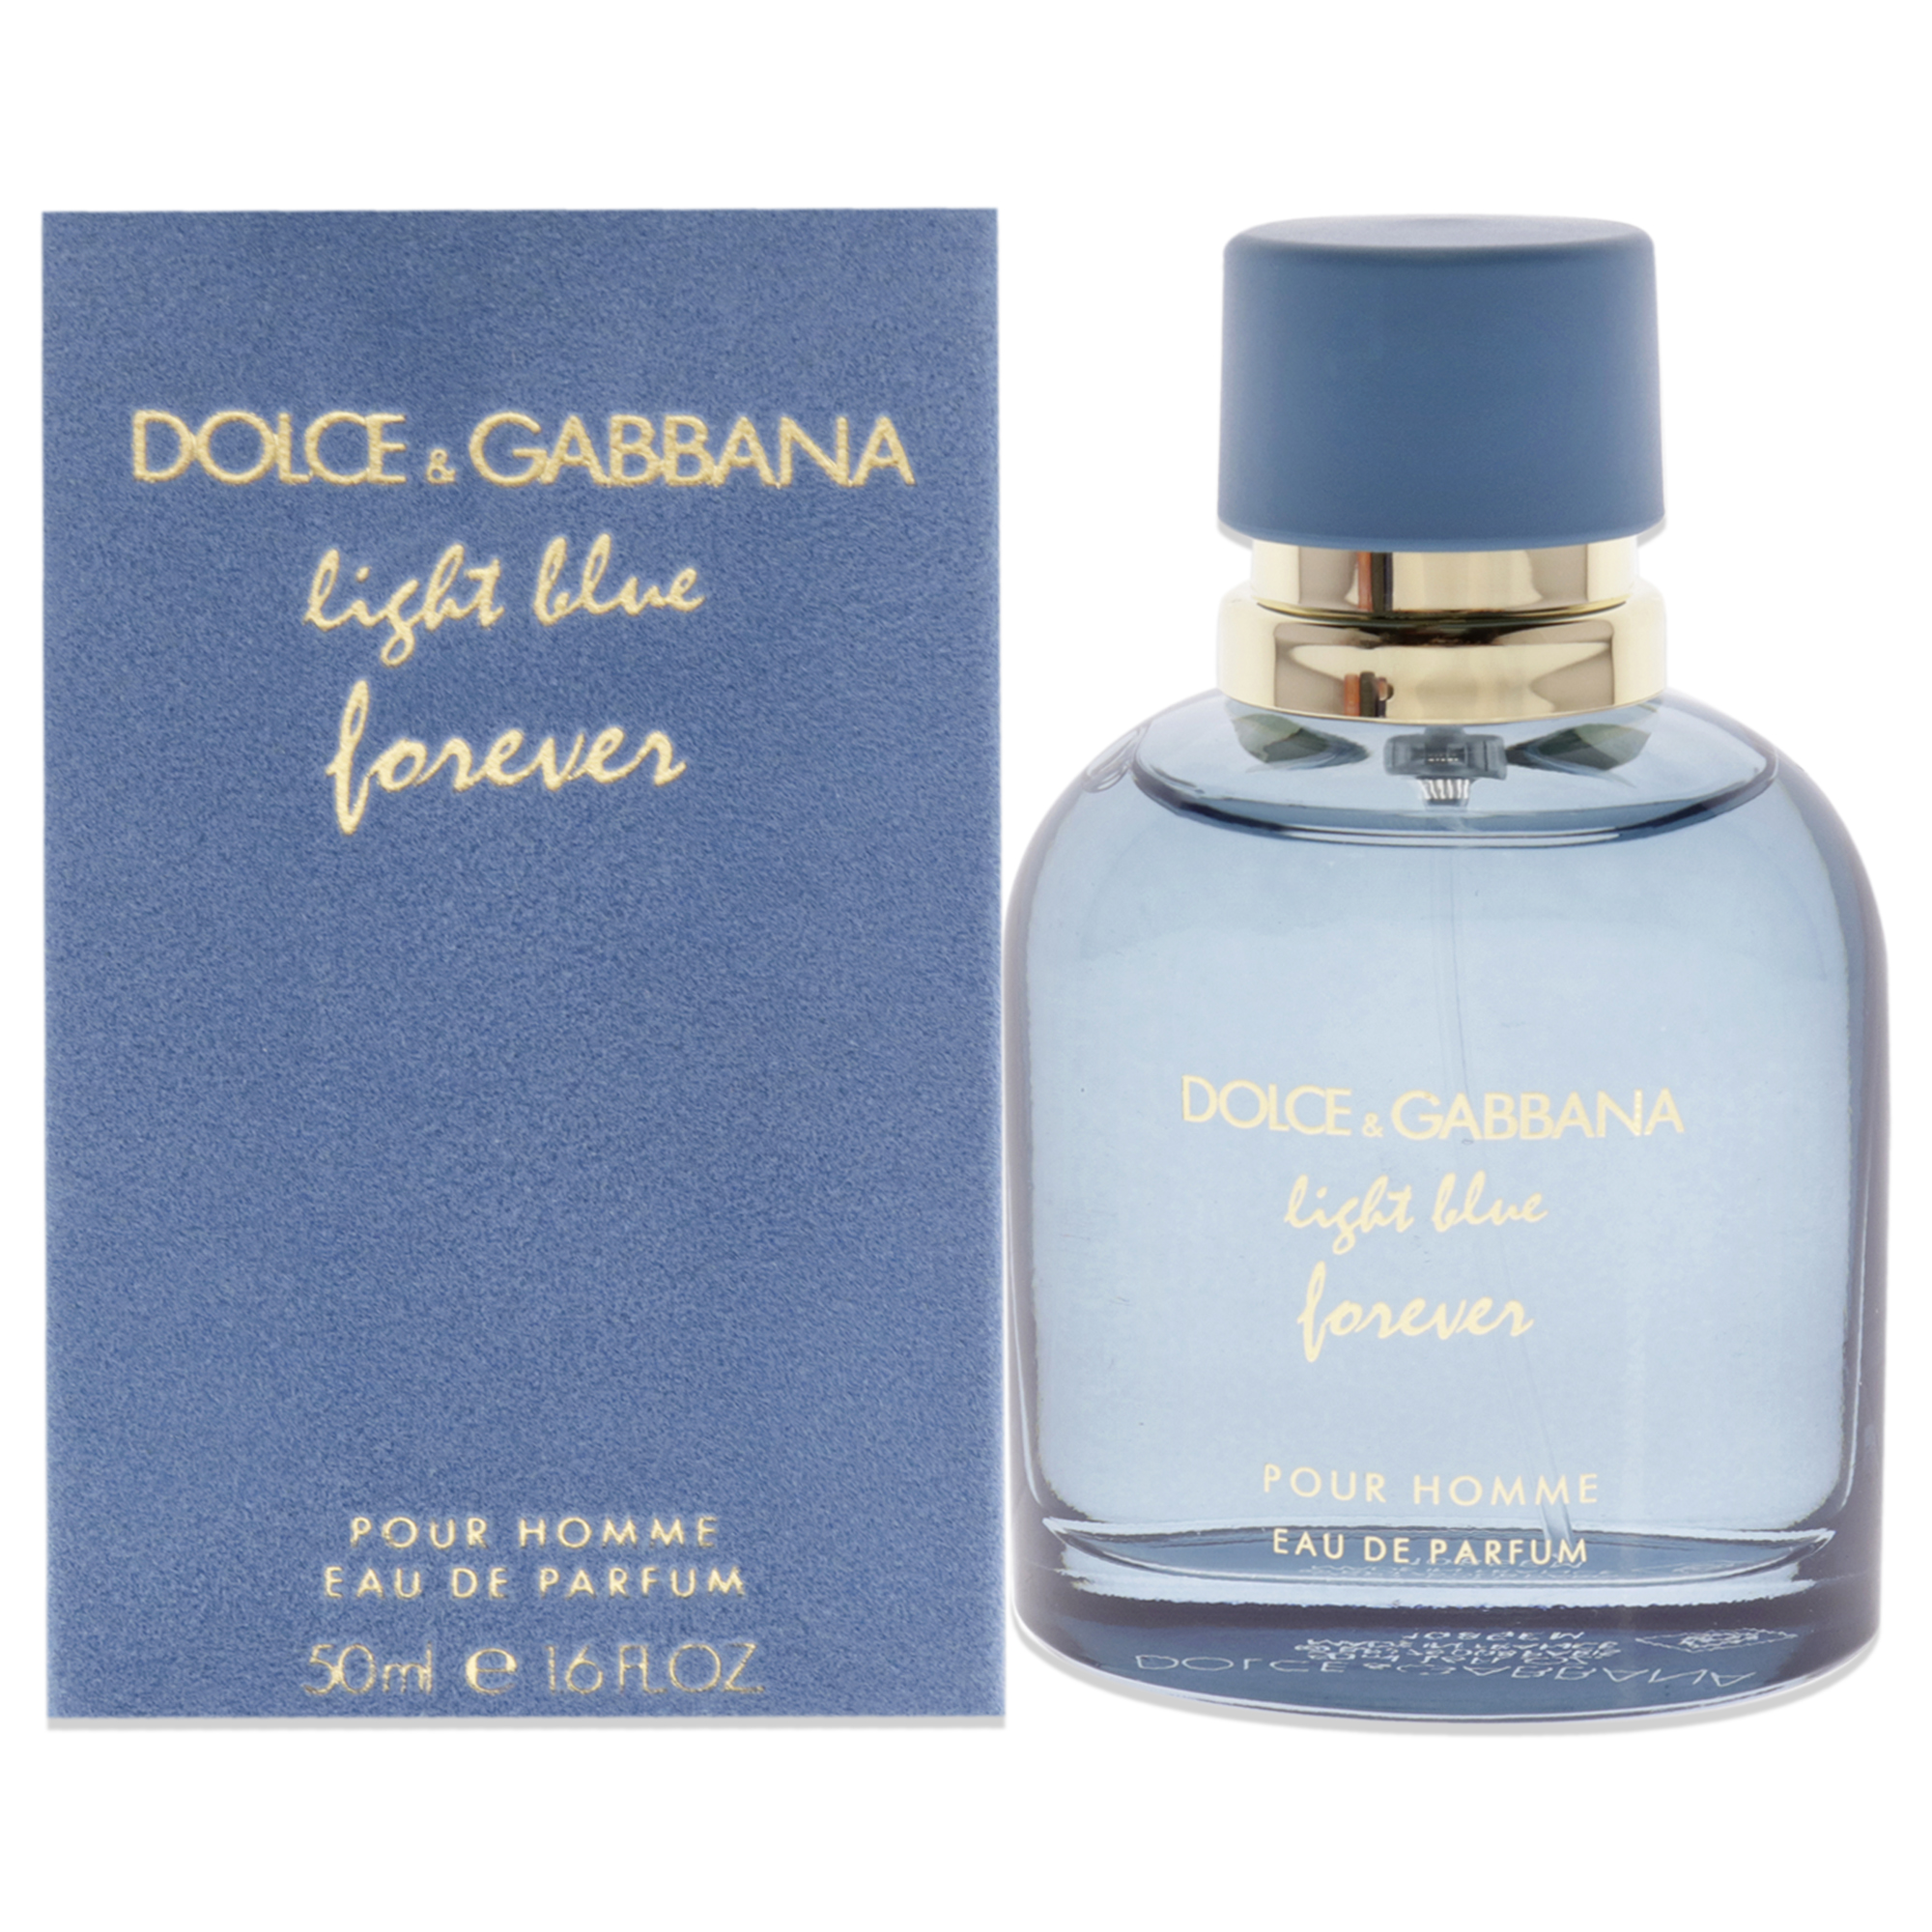 Light blue forever pour. Dolce Gabbana Light Blue Forever. Дольче Габбана Лайт Блю Форевер мужские. Дольче Габбана Форевер мужской. D&G Light Blue Forever.